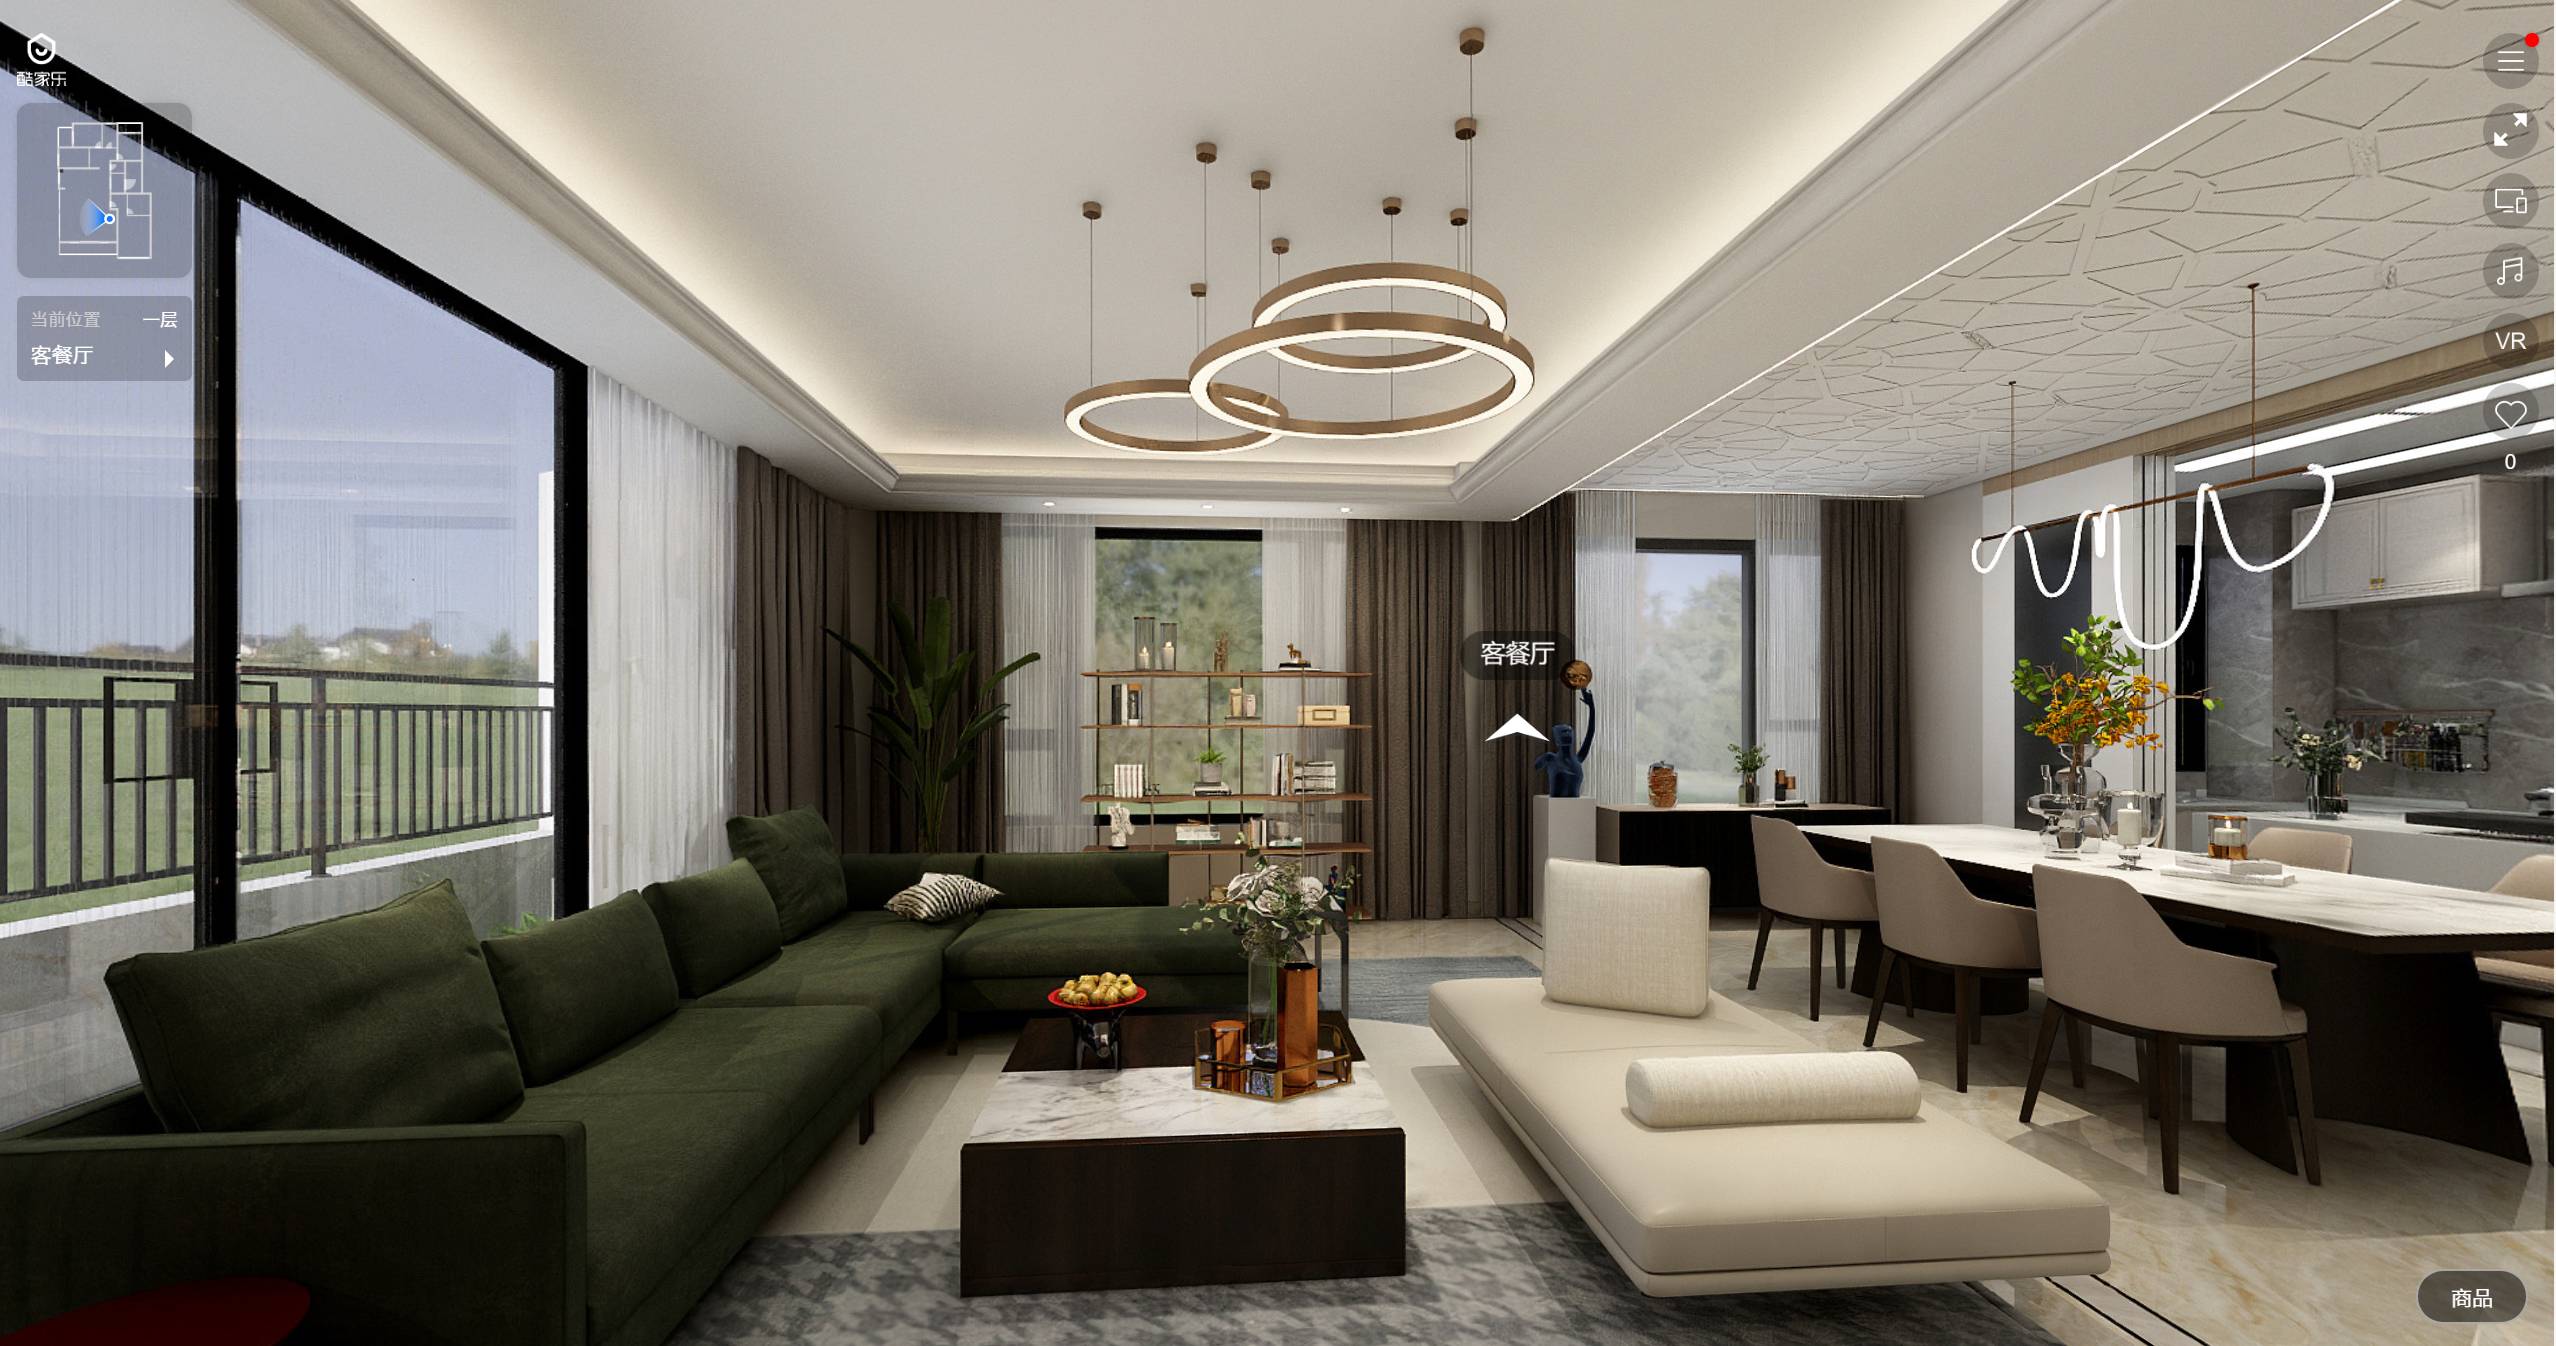 Vanke Meijing Shijie 200㎡ Kally Home Furnishing Design Plan